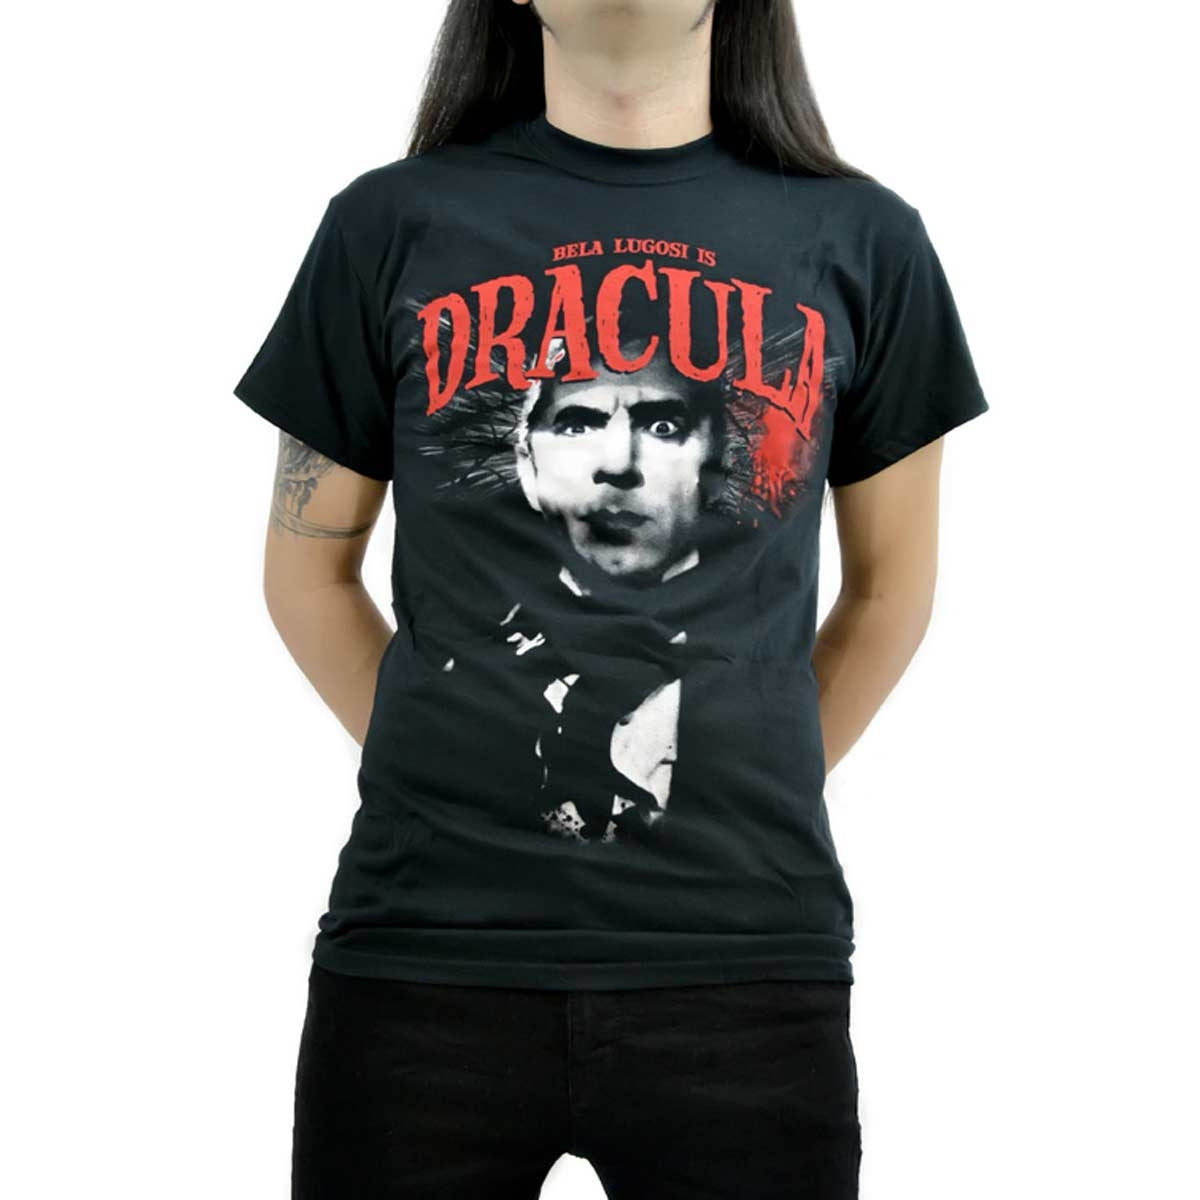 Men's Black T-shirt Bela Lugosi is Dracula Man Another Way of Life